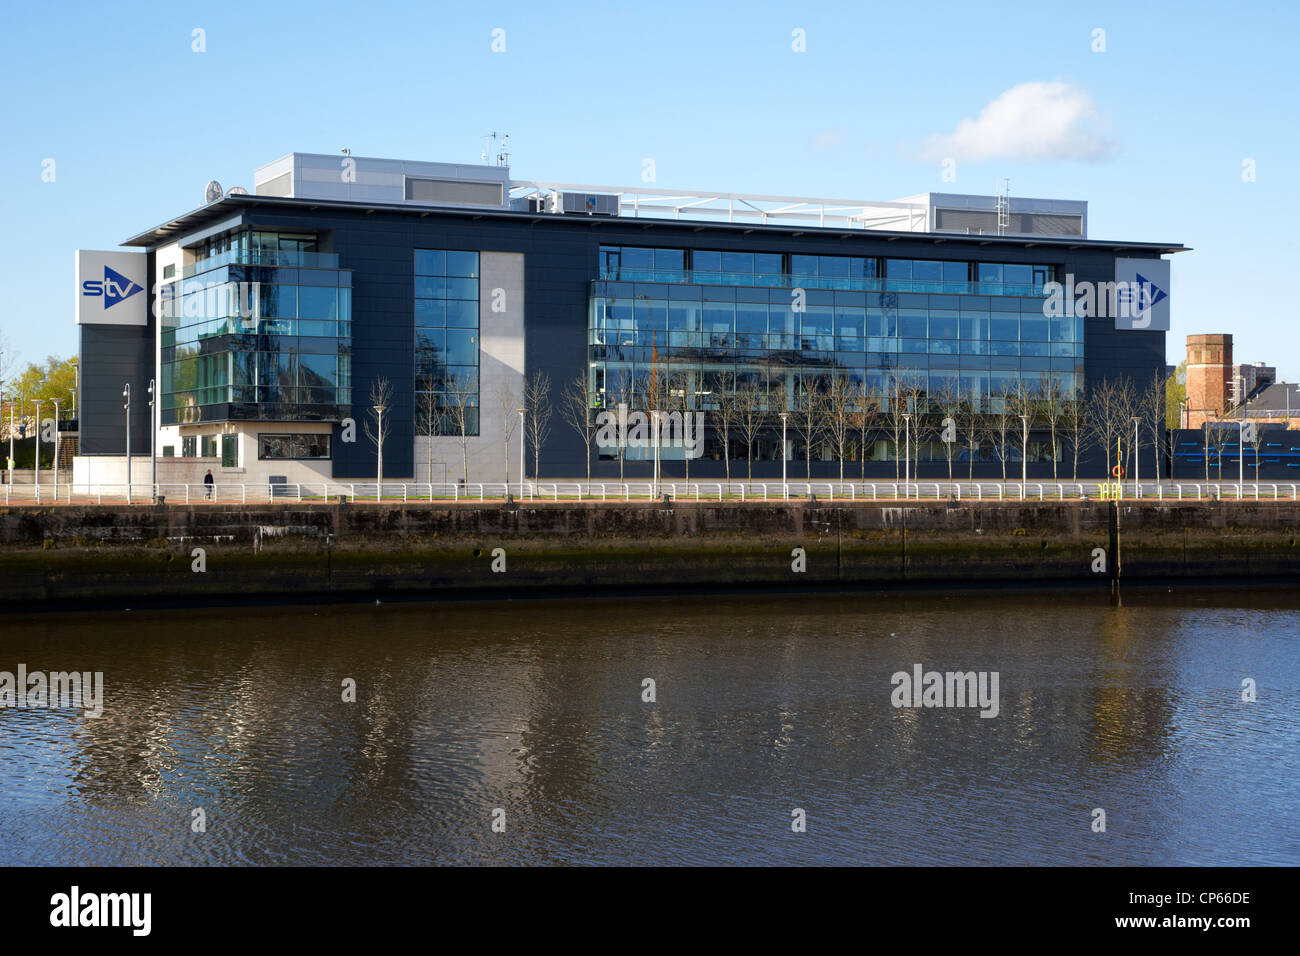 stv central scottish television studios pacific quay river clyde Glasgow Scotland UK Stock Photo